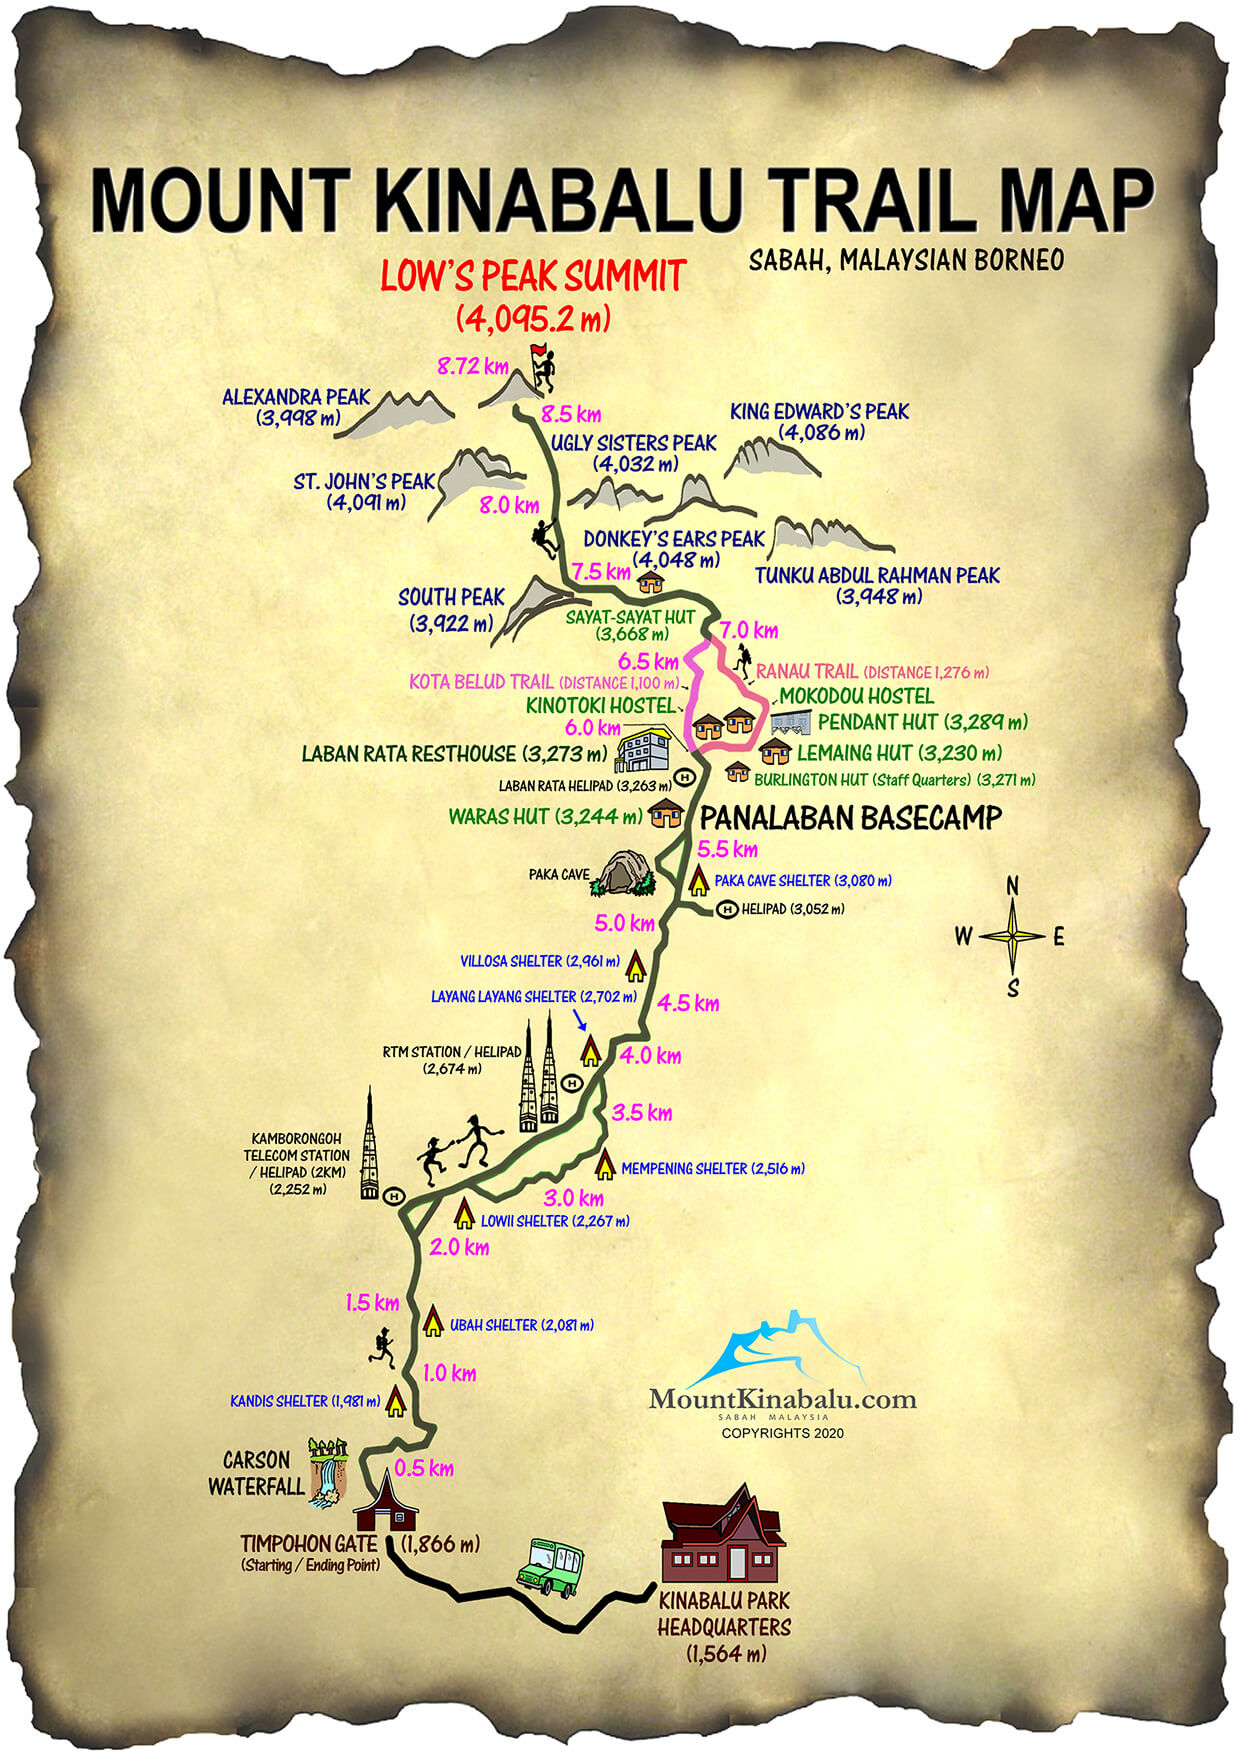 Mount Kinabalu Trail Map - Sabah Malaysian Borneo